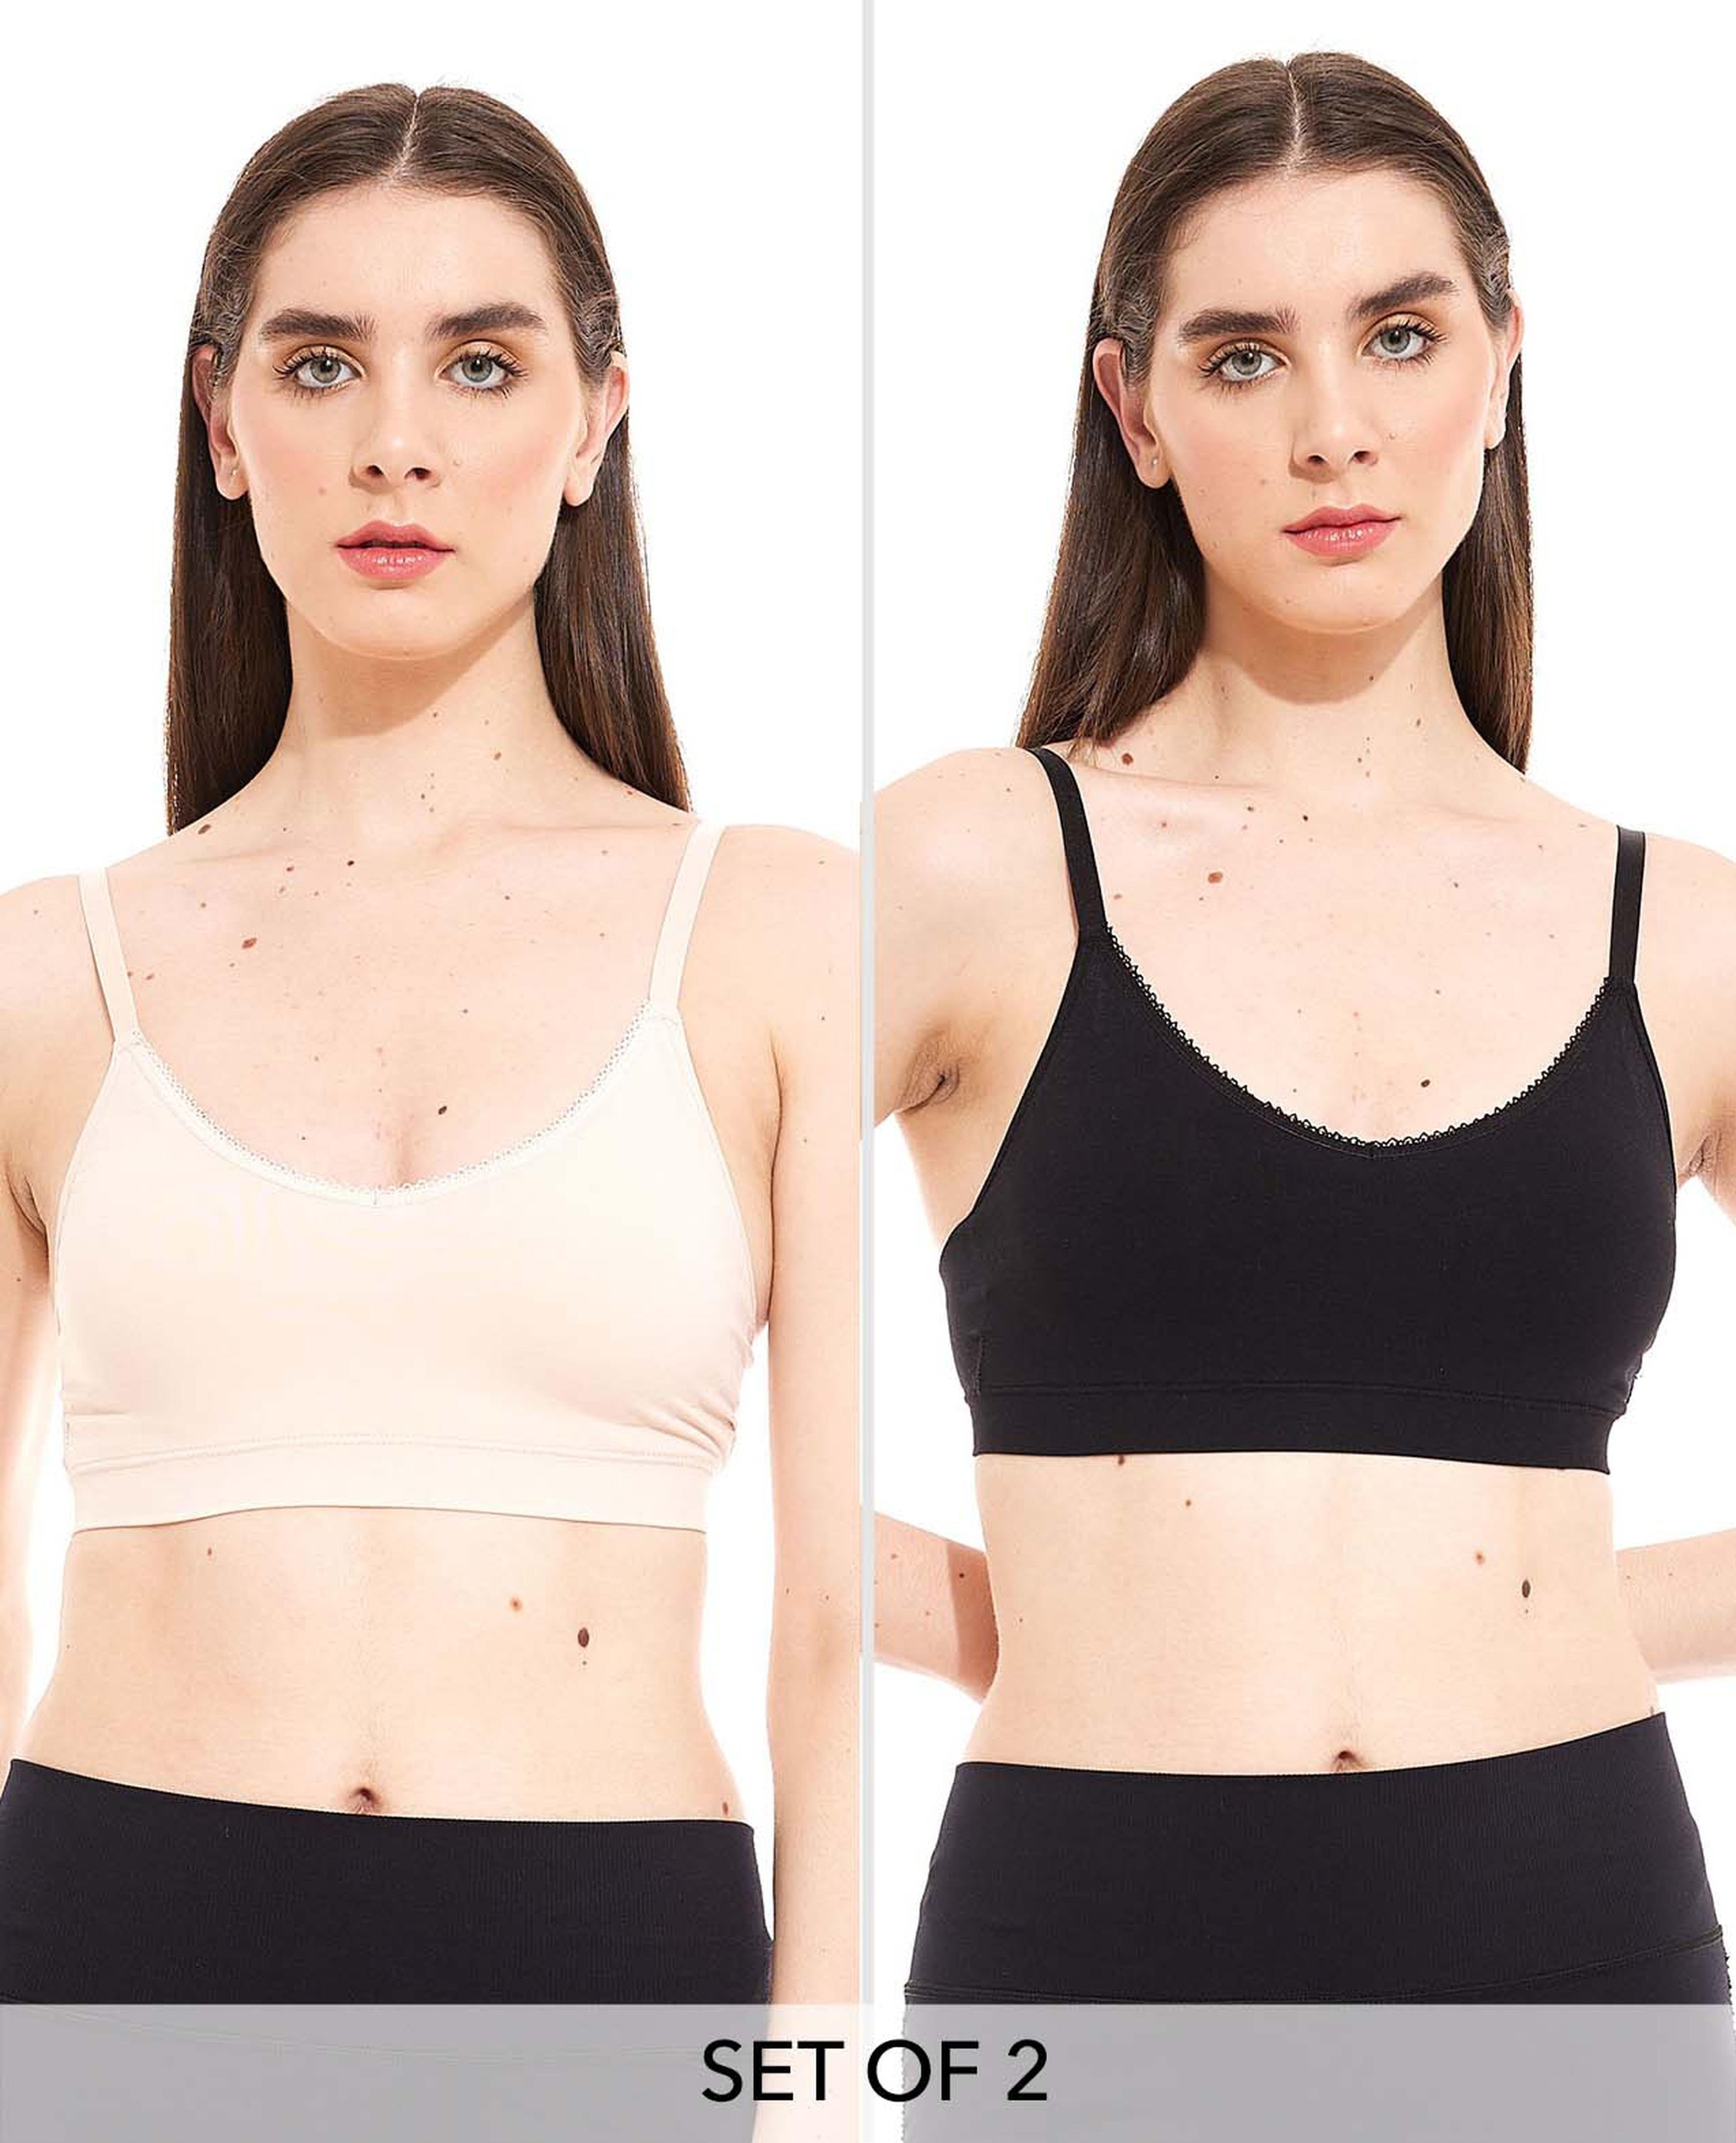 Buy online Beige Solid Sports Bra from lingerie for Women by Lady